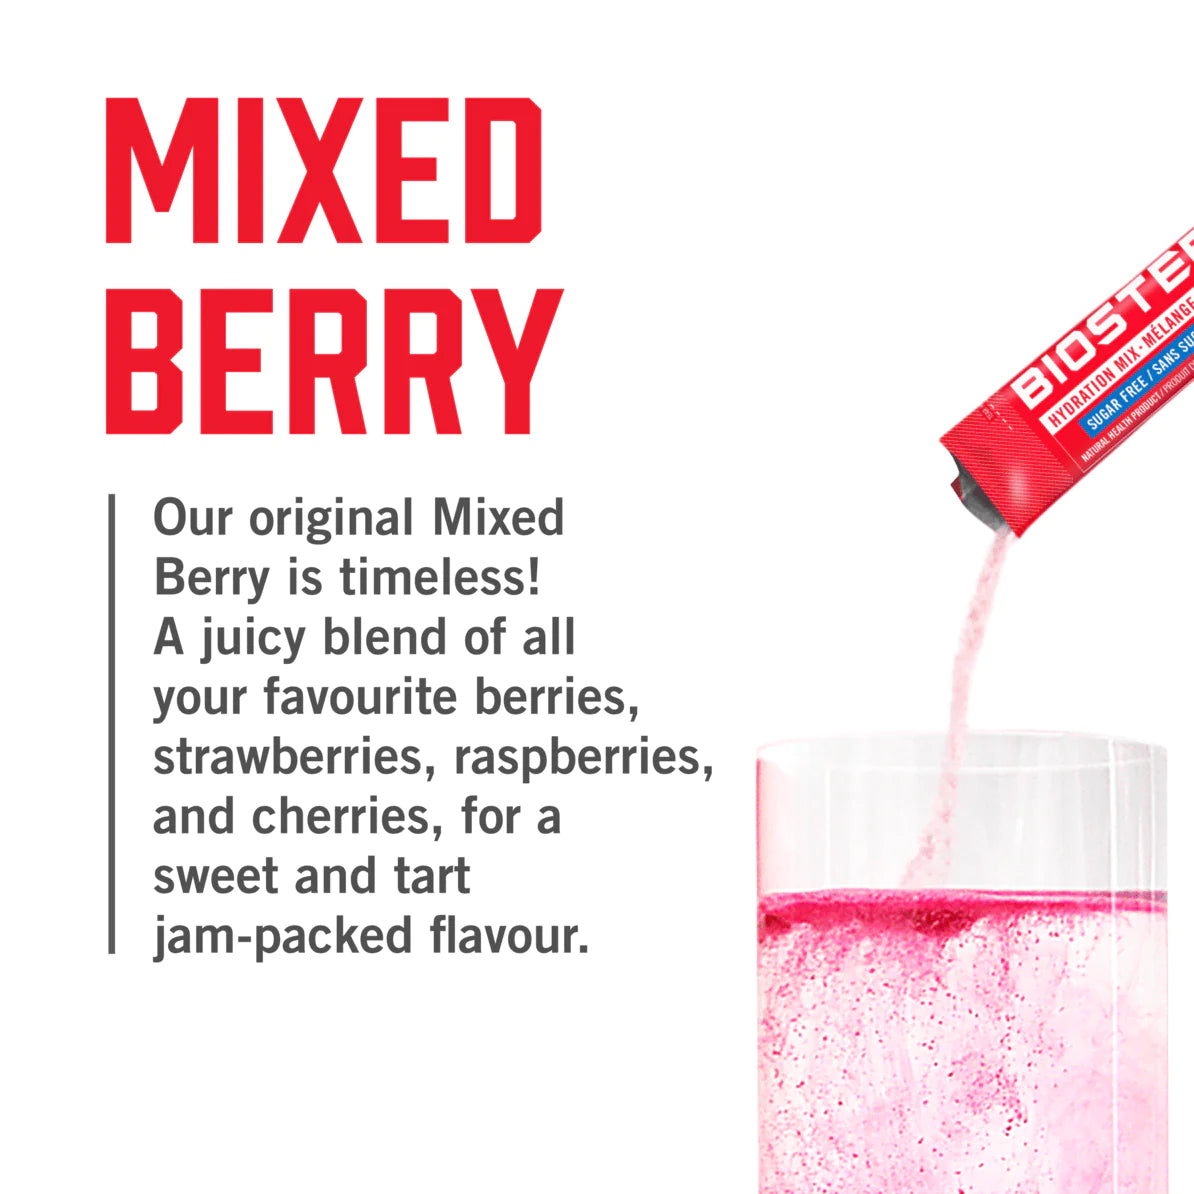 BioSteel Hydration Mix (7 individual packets) Electrolytes White Freeze,Peach Mango,Mixed Berry,Blue Raspberry Biosteel